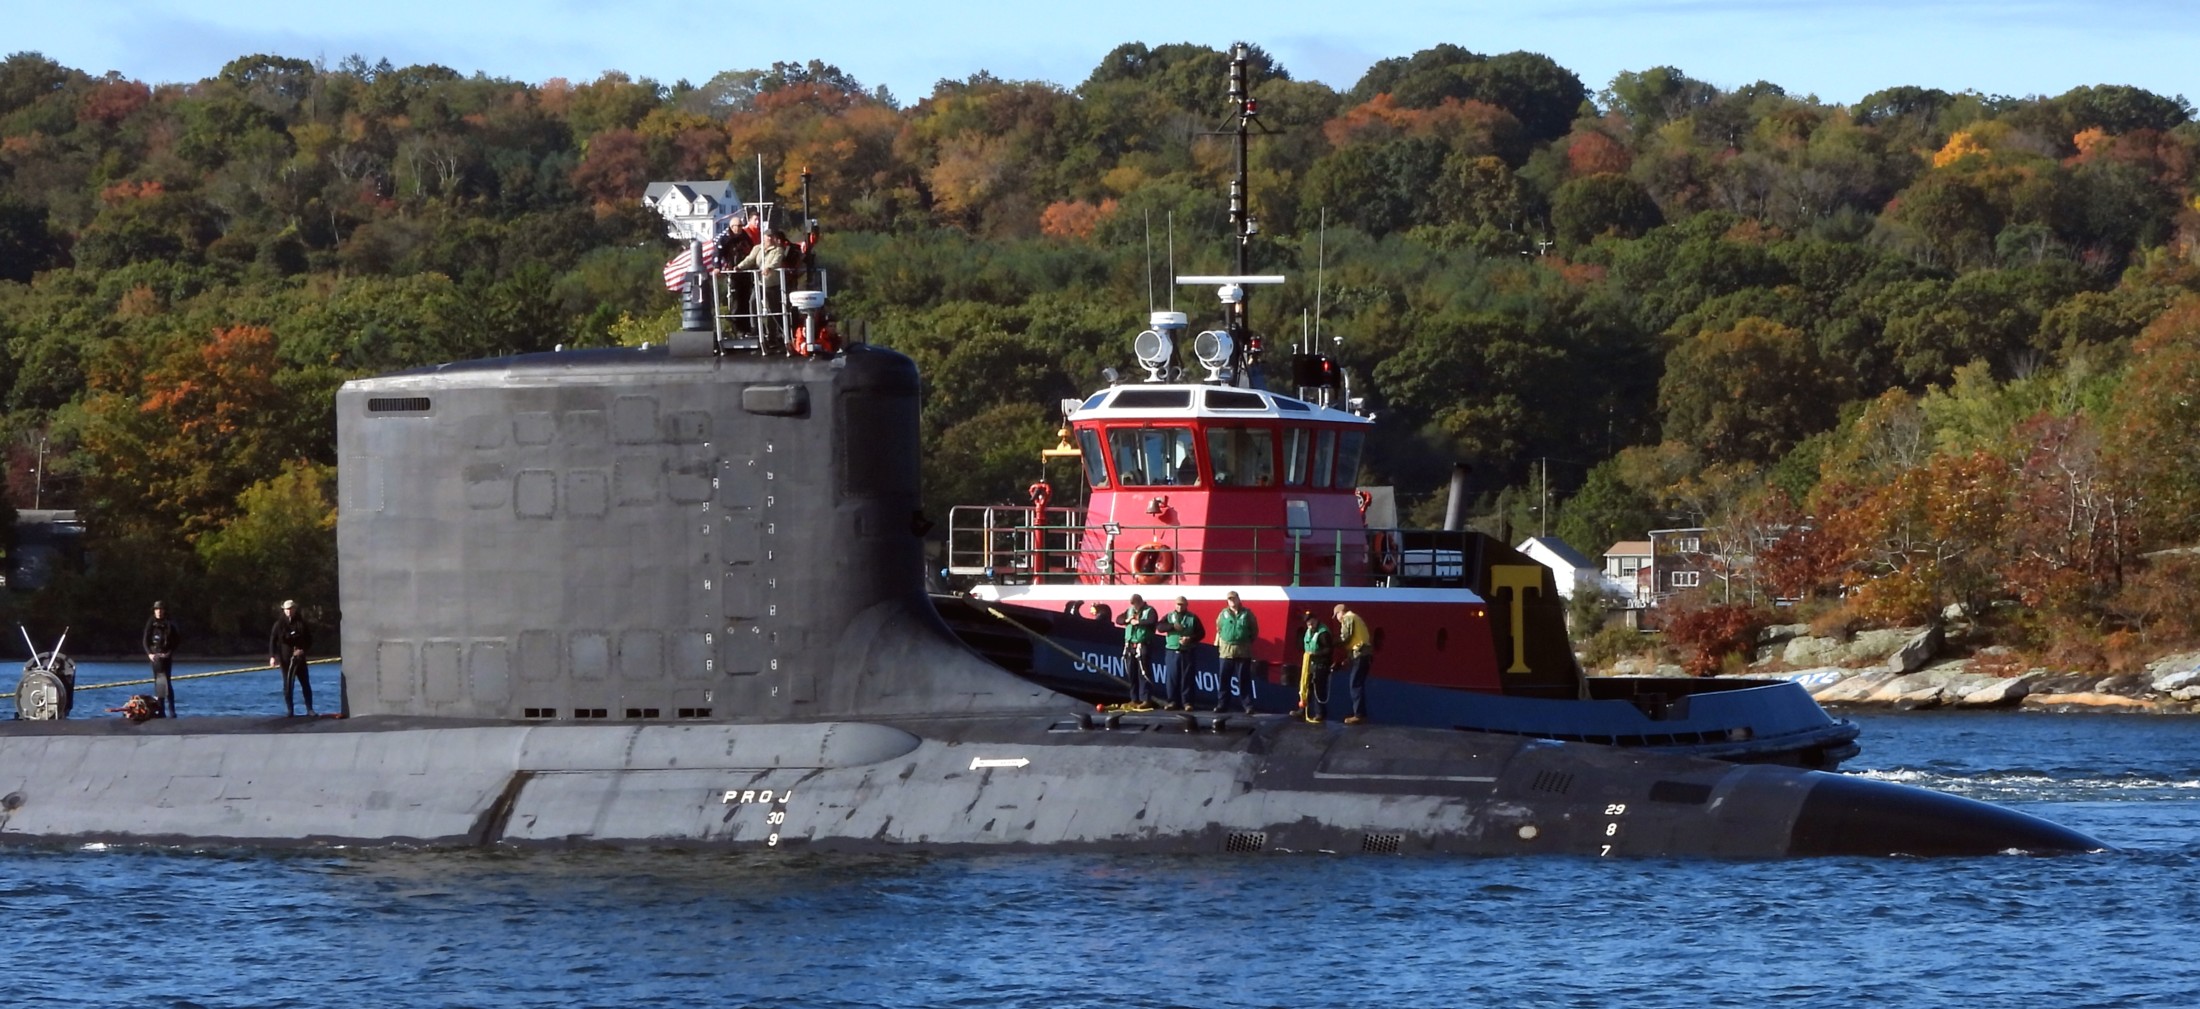 ssn-793 uss oregon virginia class attack submarine block iv us navy returning new london groton 15